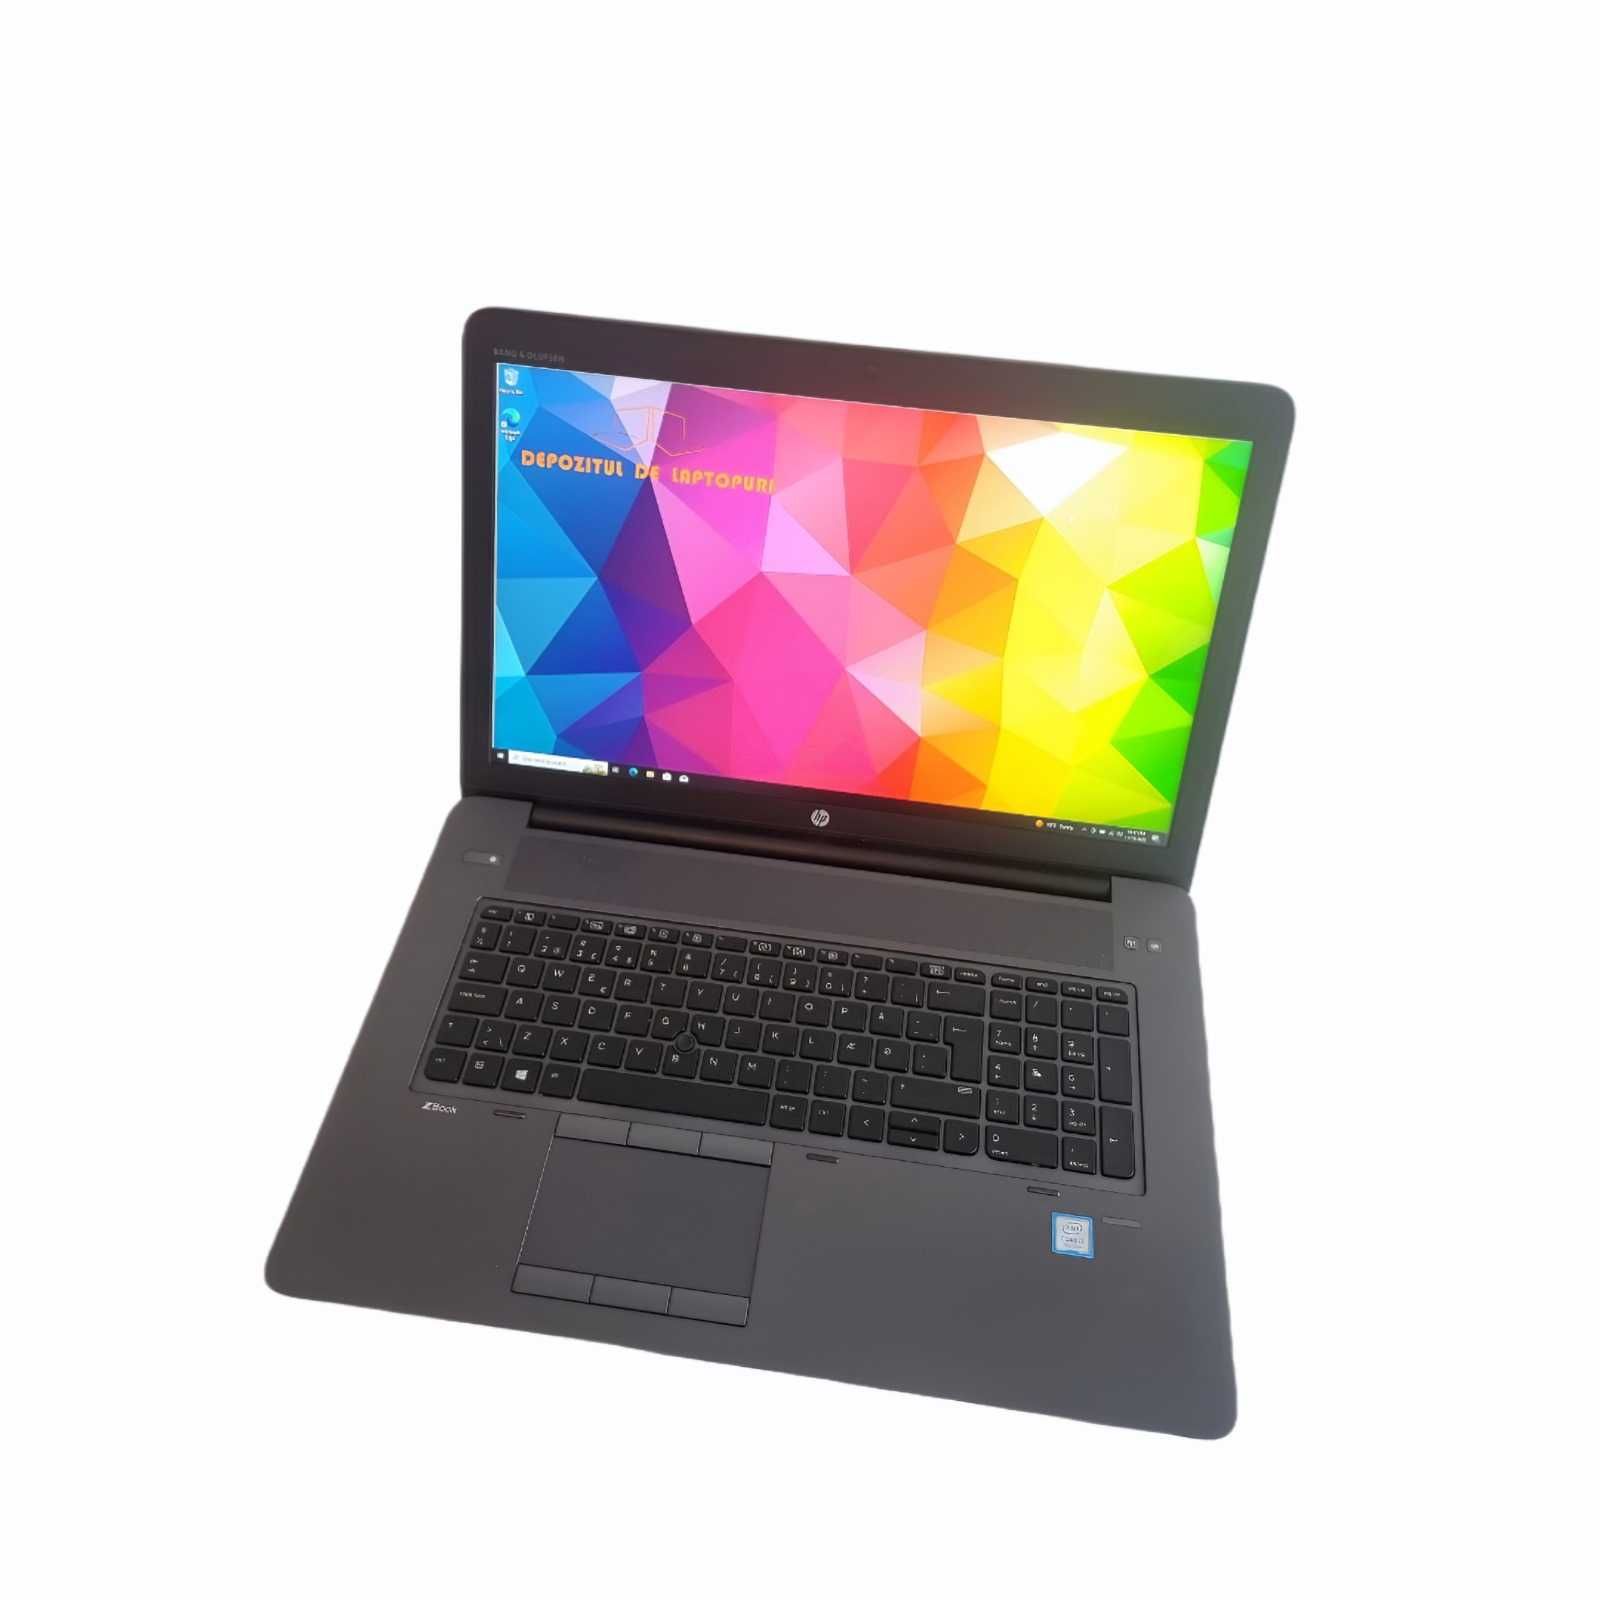 Laptop HP zBook 17 G4 i7-7700HQ Nvidia Quadro M1200 32 GB RAM 1TB SSD